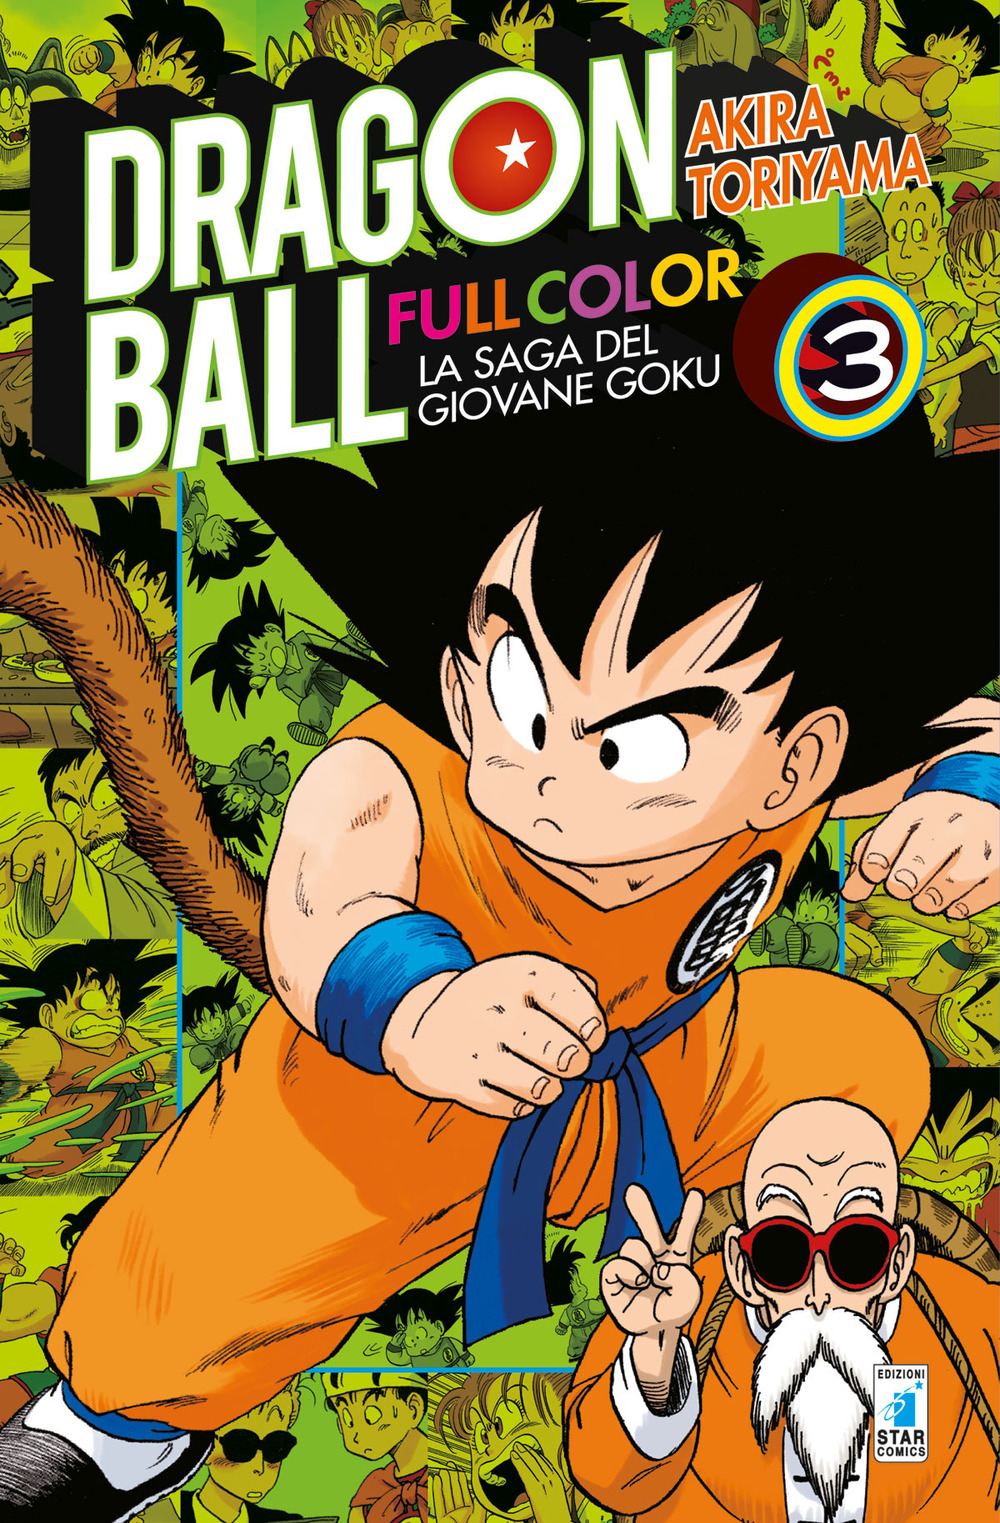 DRAGON BALL FULL COLOR - LA SAGA DEL GIOVANE GOKU N. 3